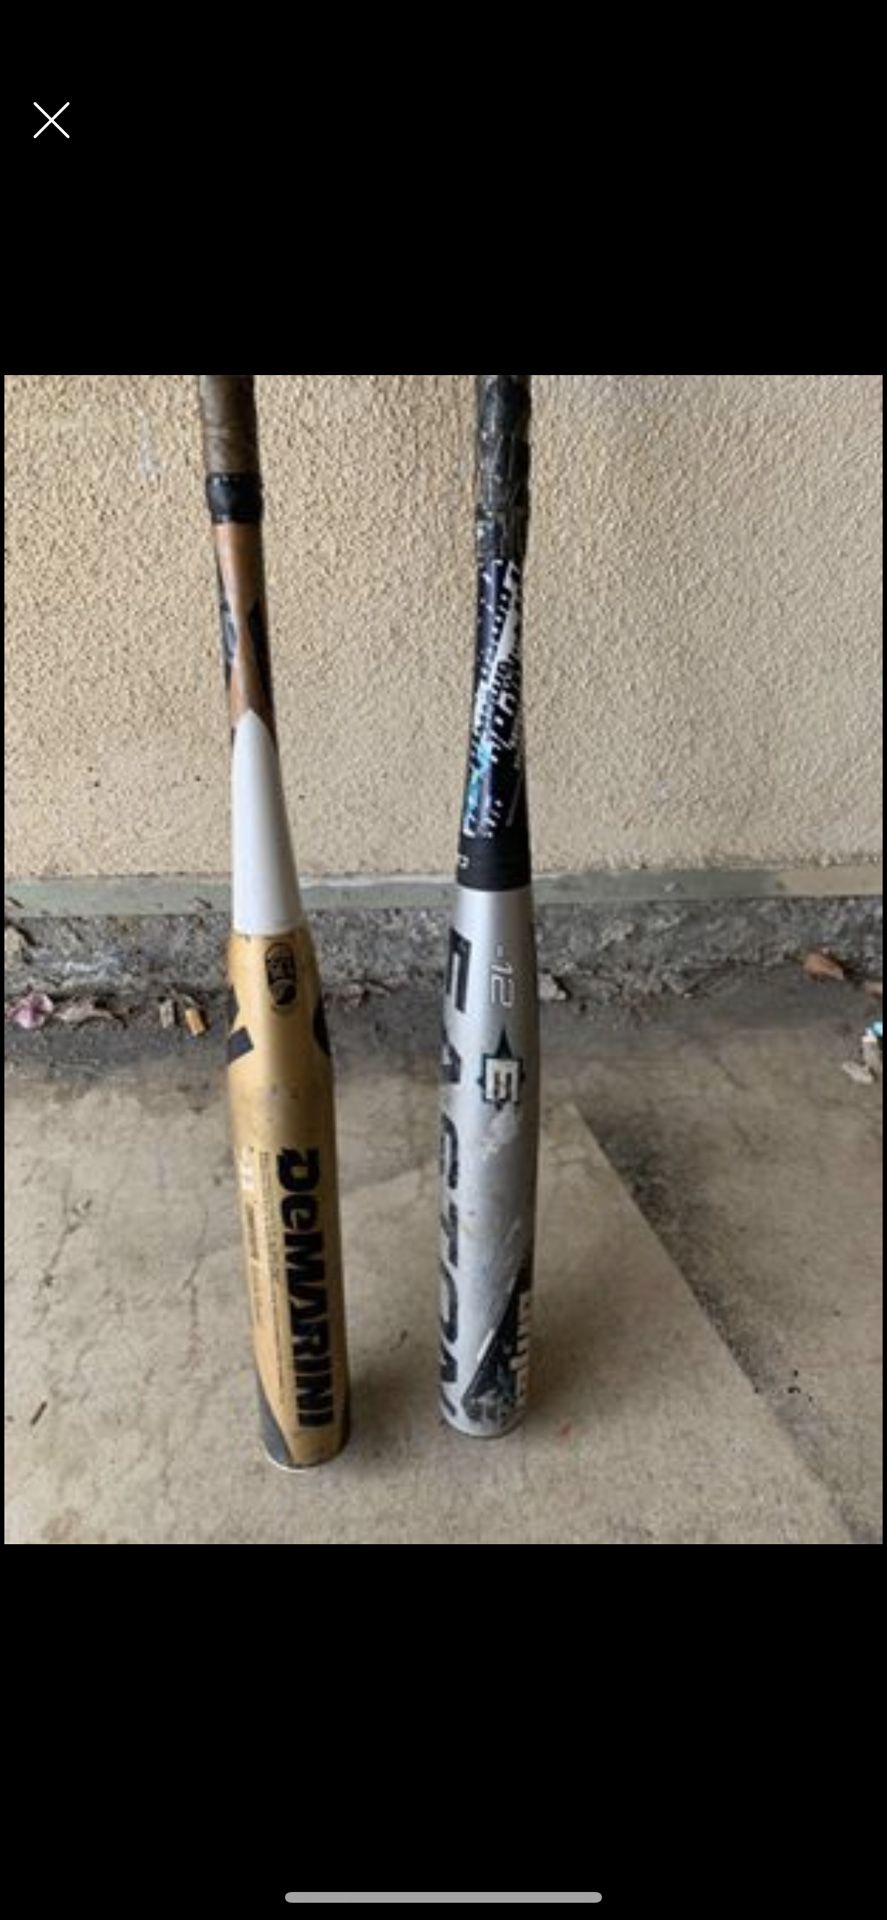 USSSA baseball bats